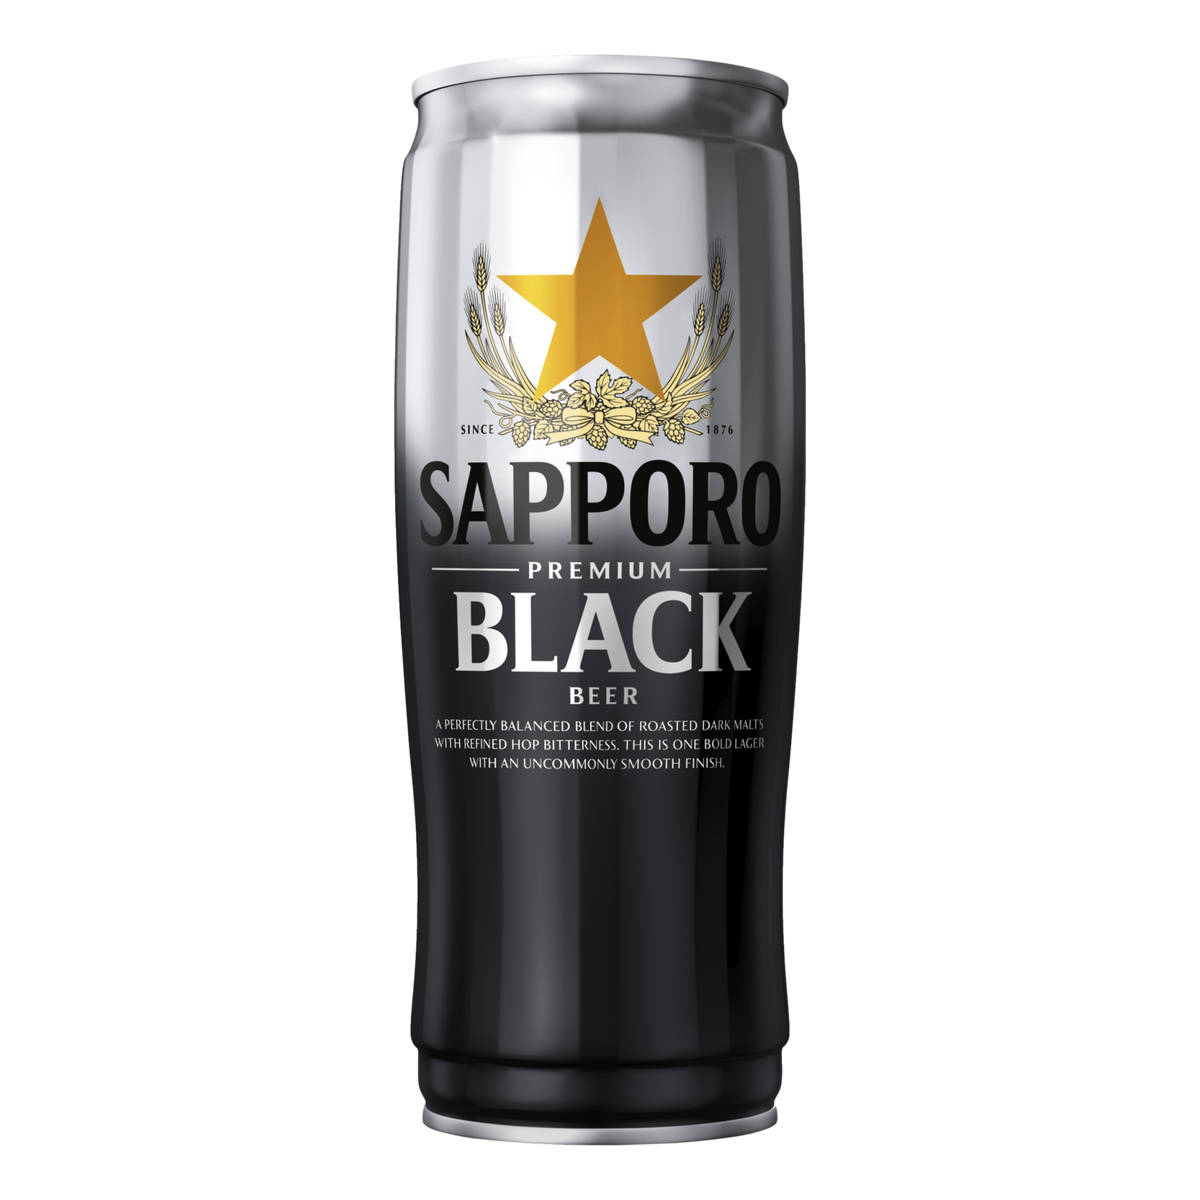 Sapporo Premium Black Dark Lager 650ml Can Case of 12